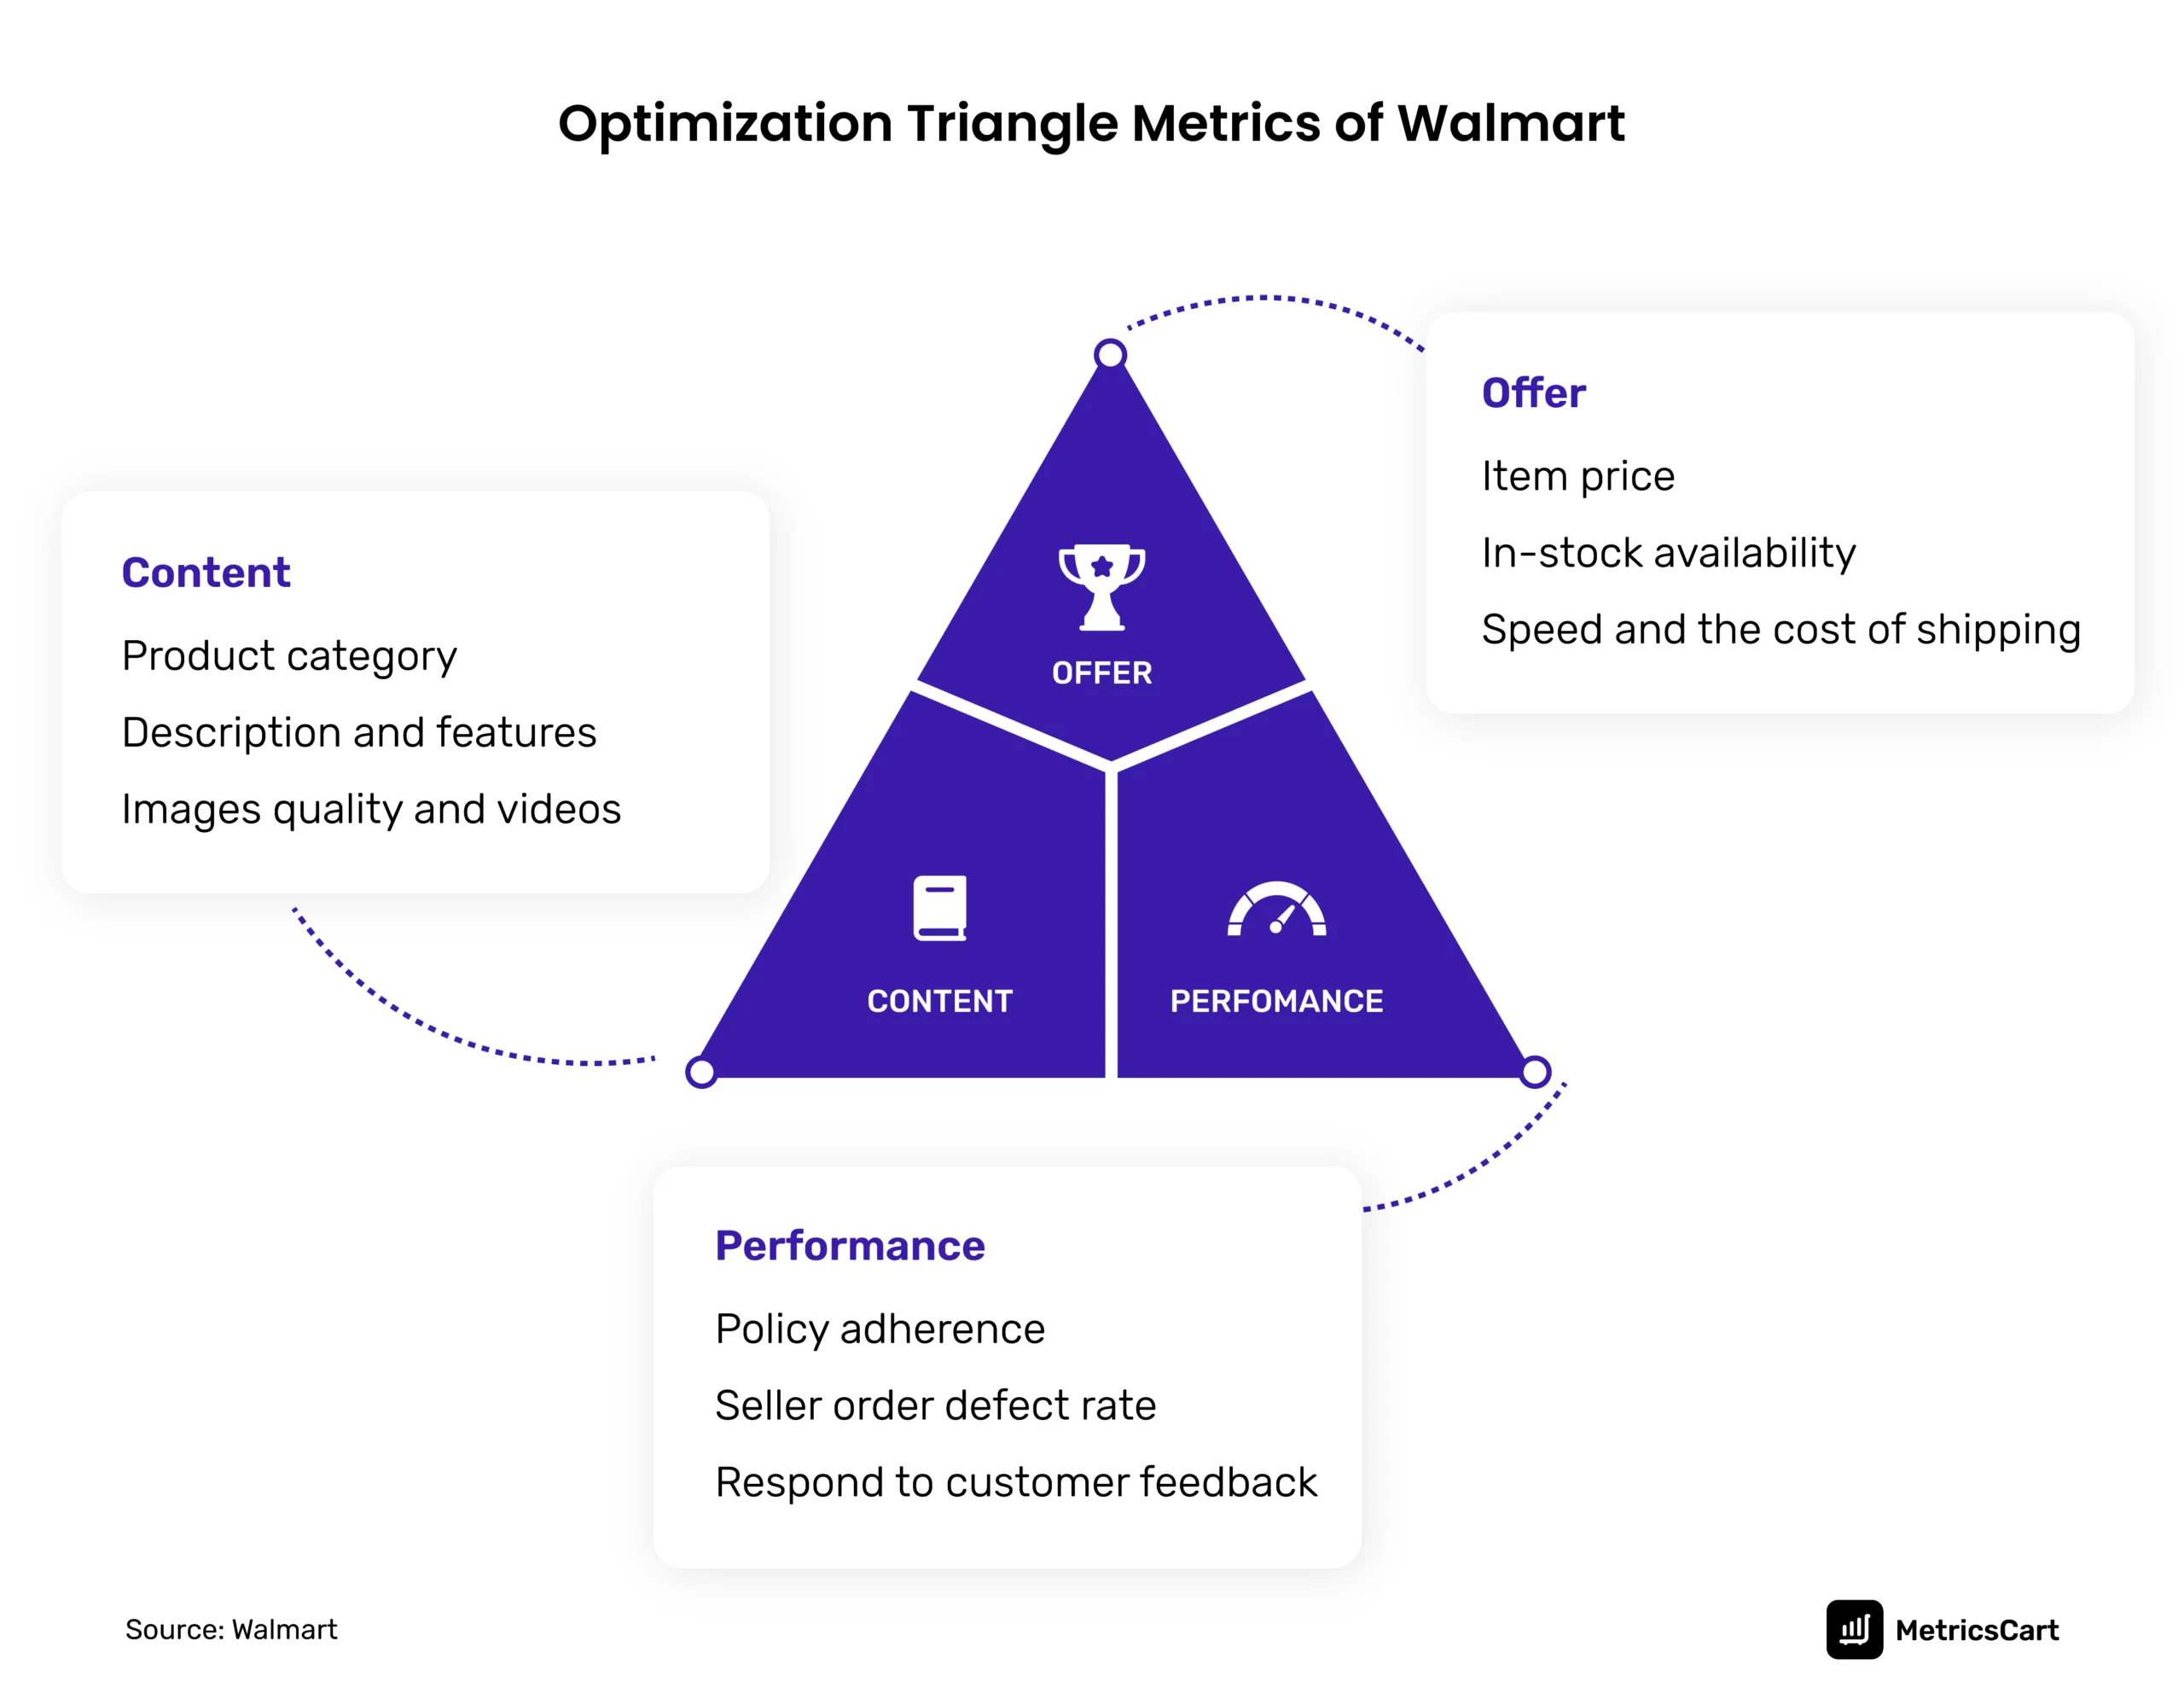 the image shows the three metrics on Walmart’s optimization triangle